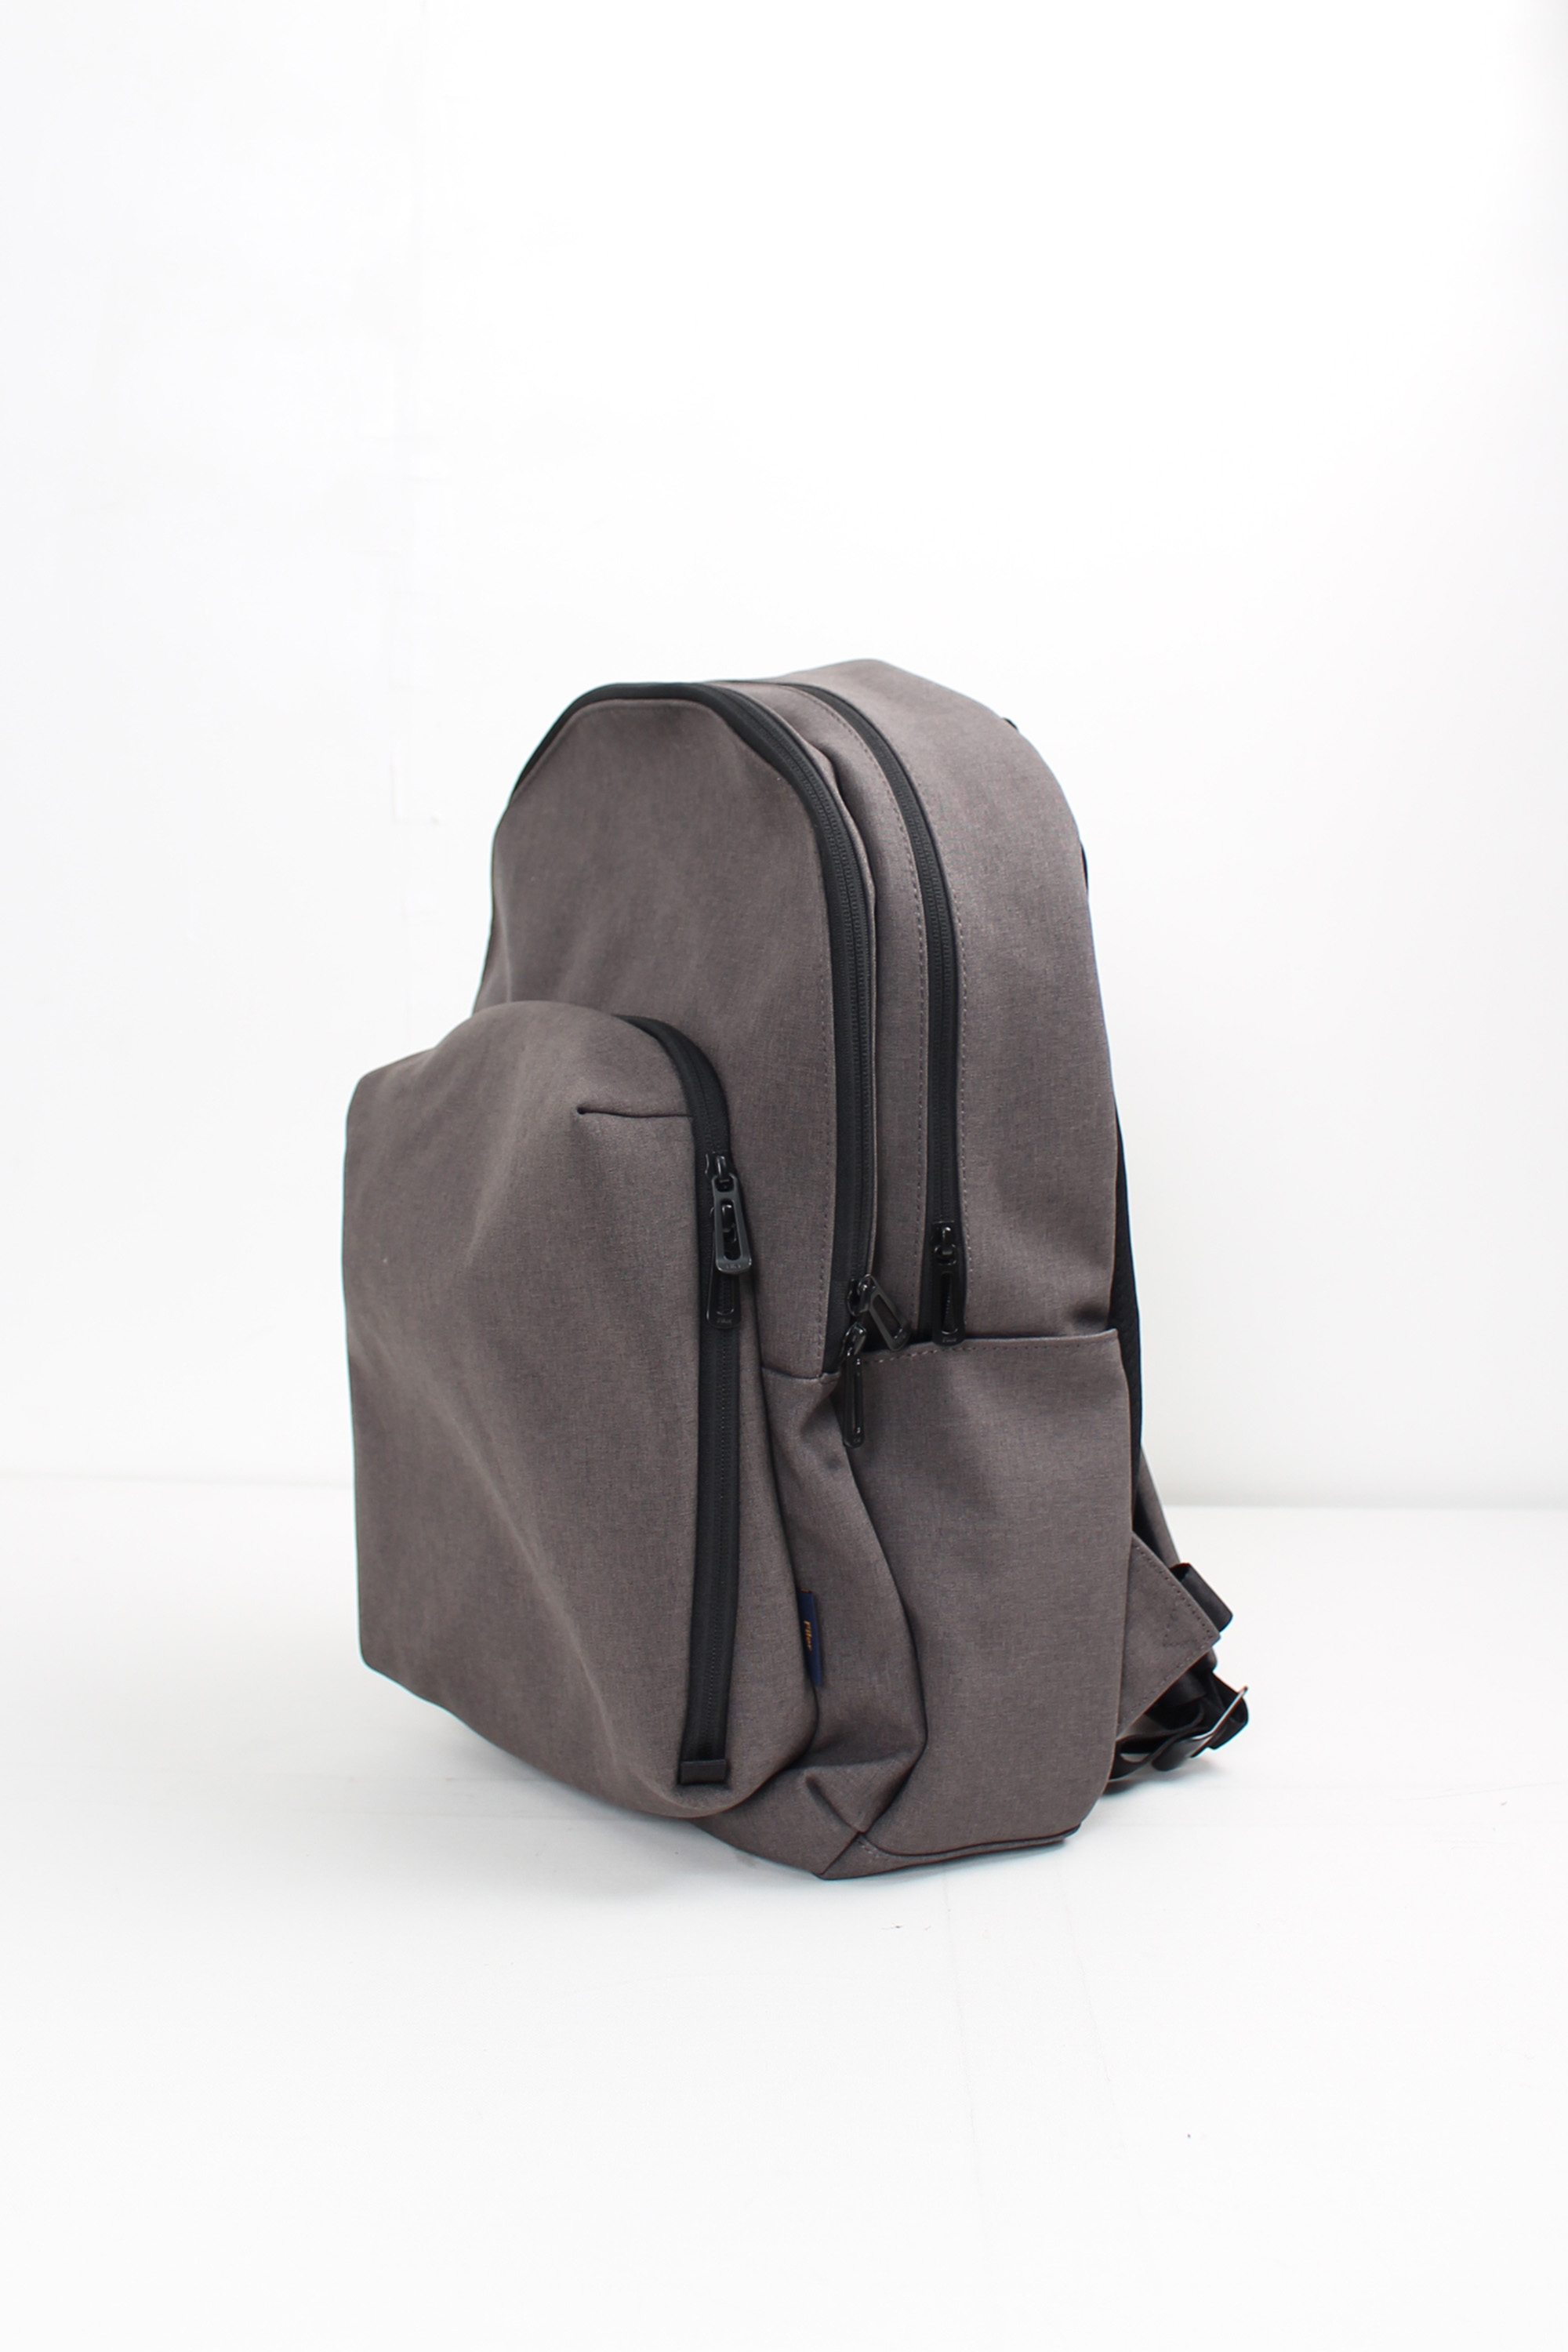 Filer backpack